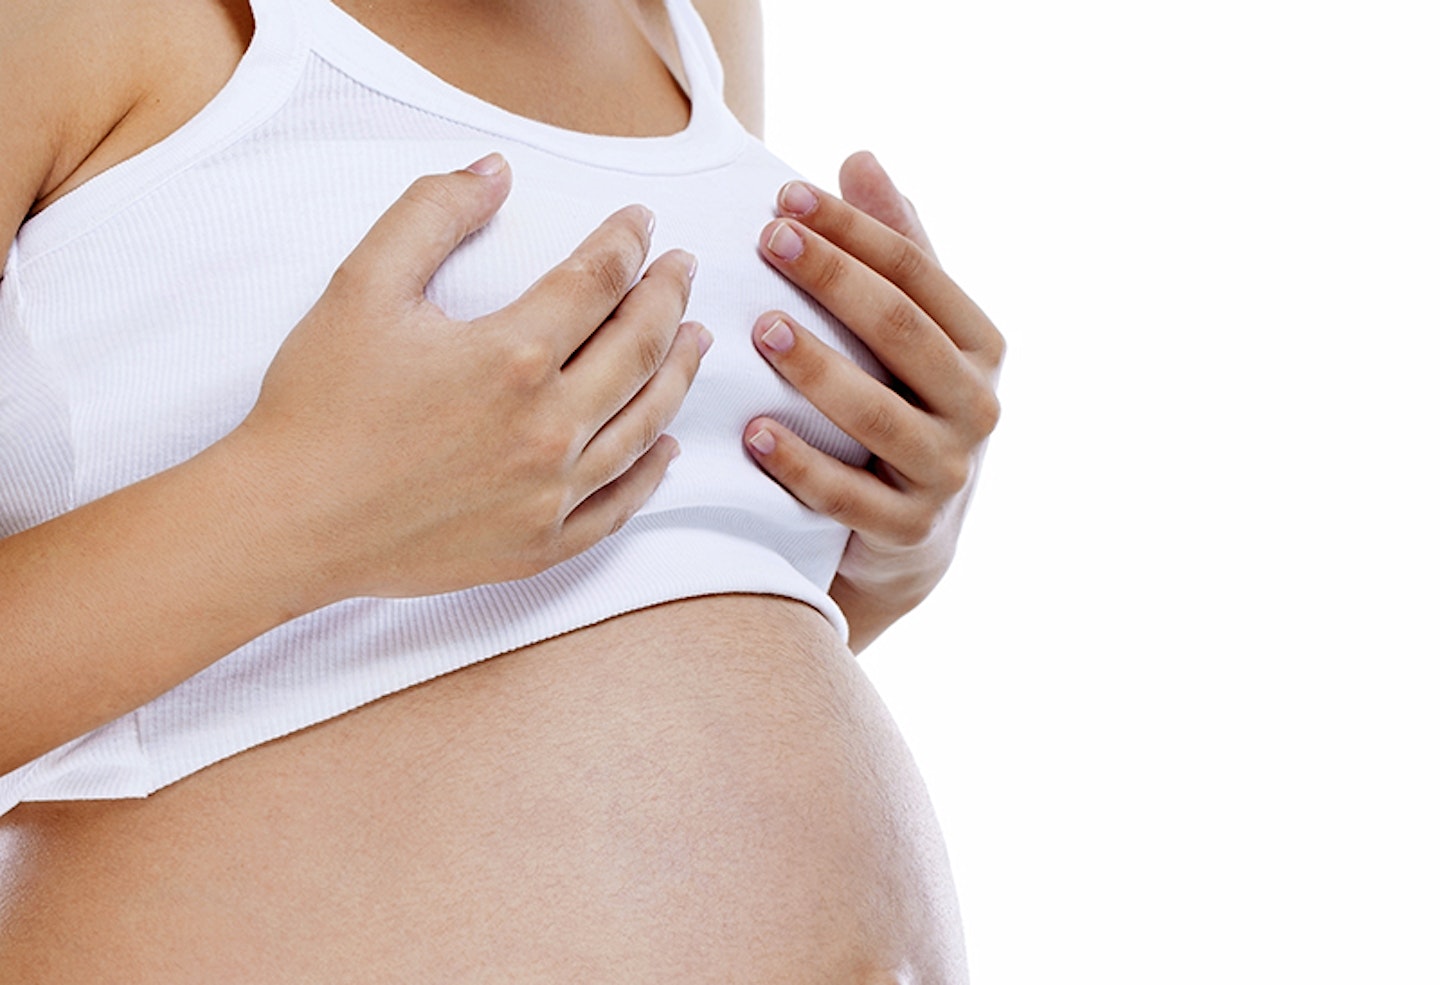 Tender breasts during pregnancy